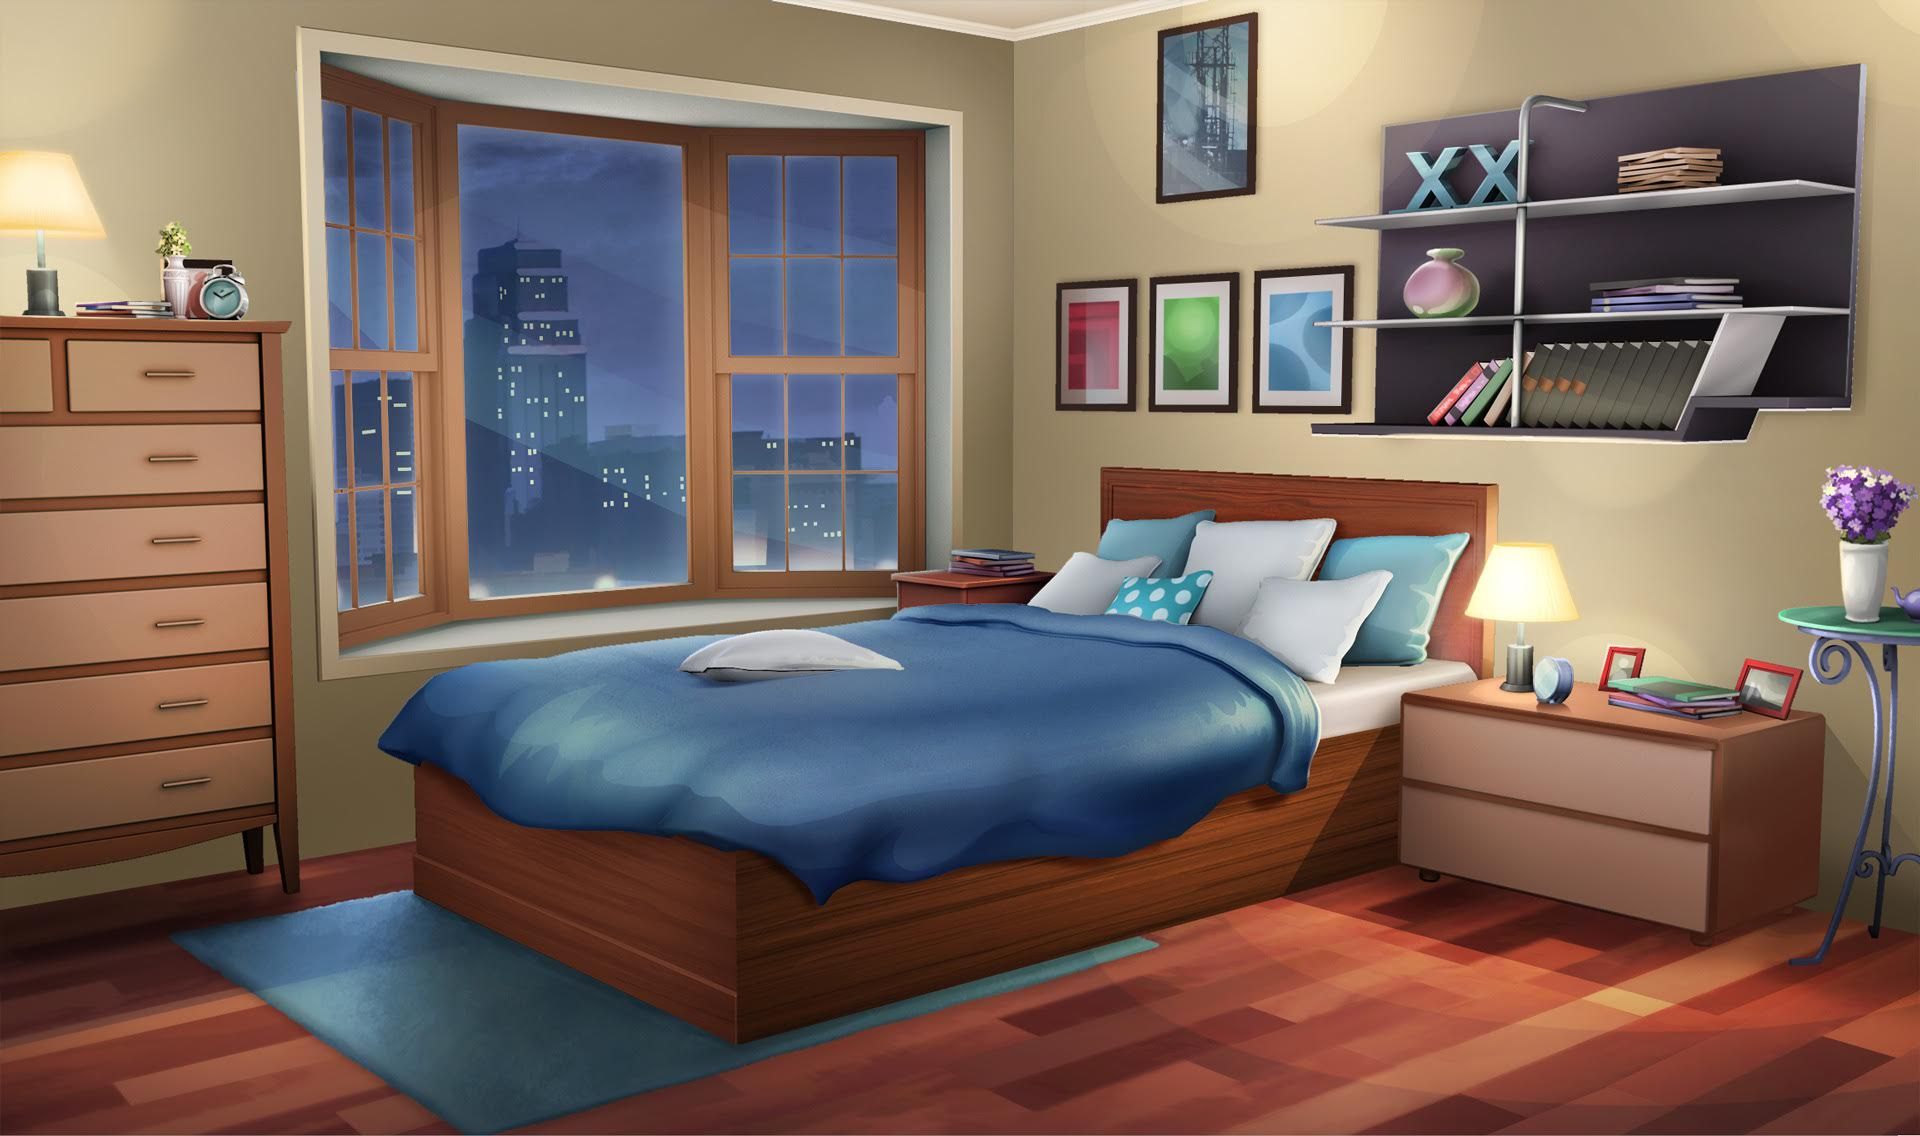 anime bedroom wallpaper,bedroom,furniture,bed,room,bed sheet